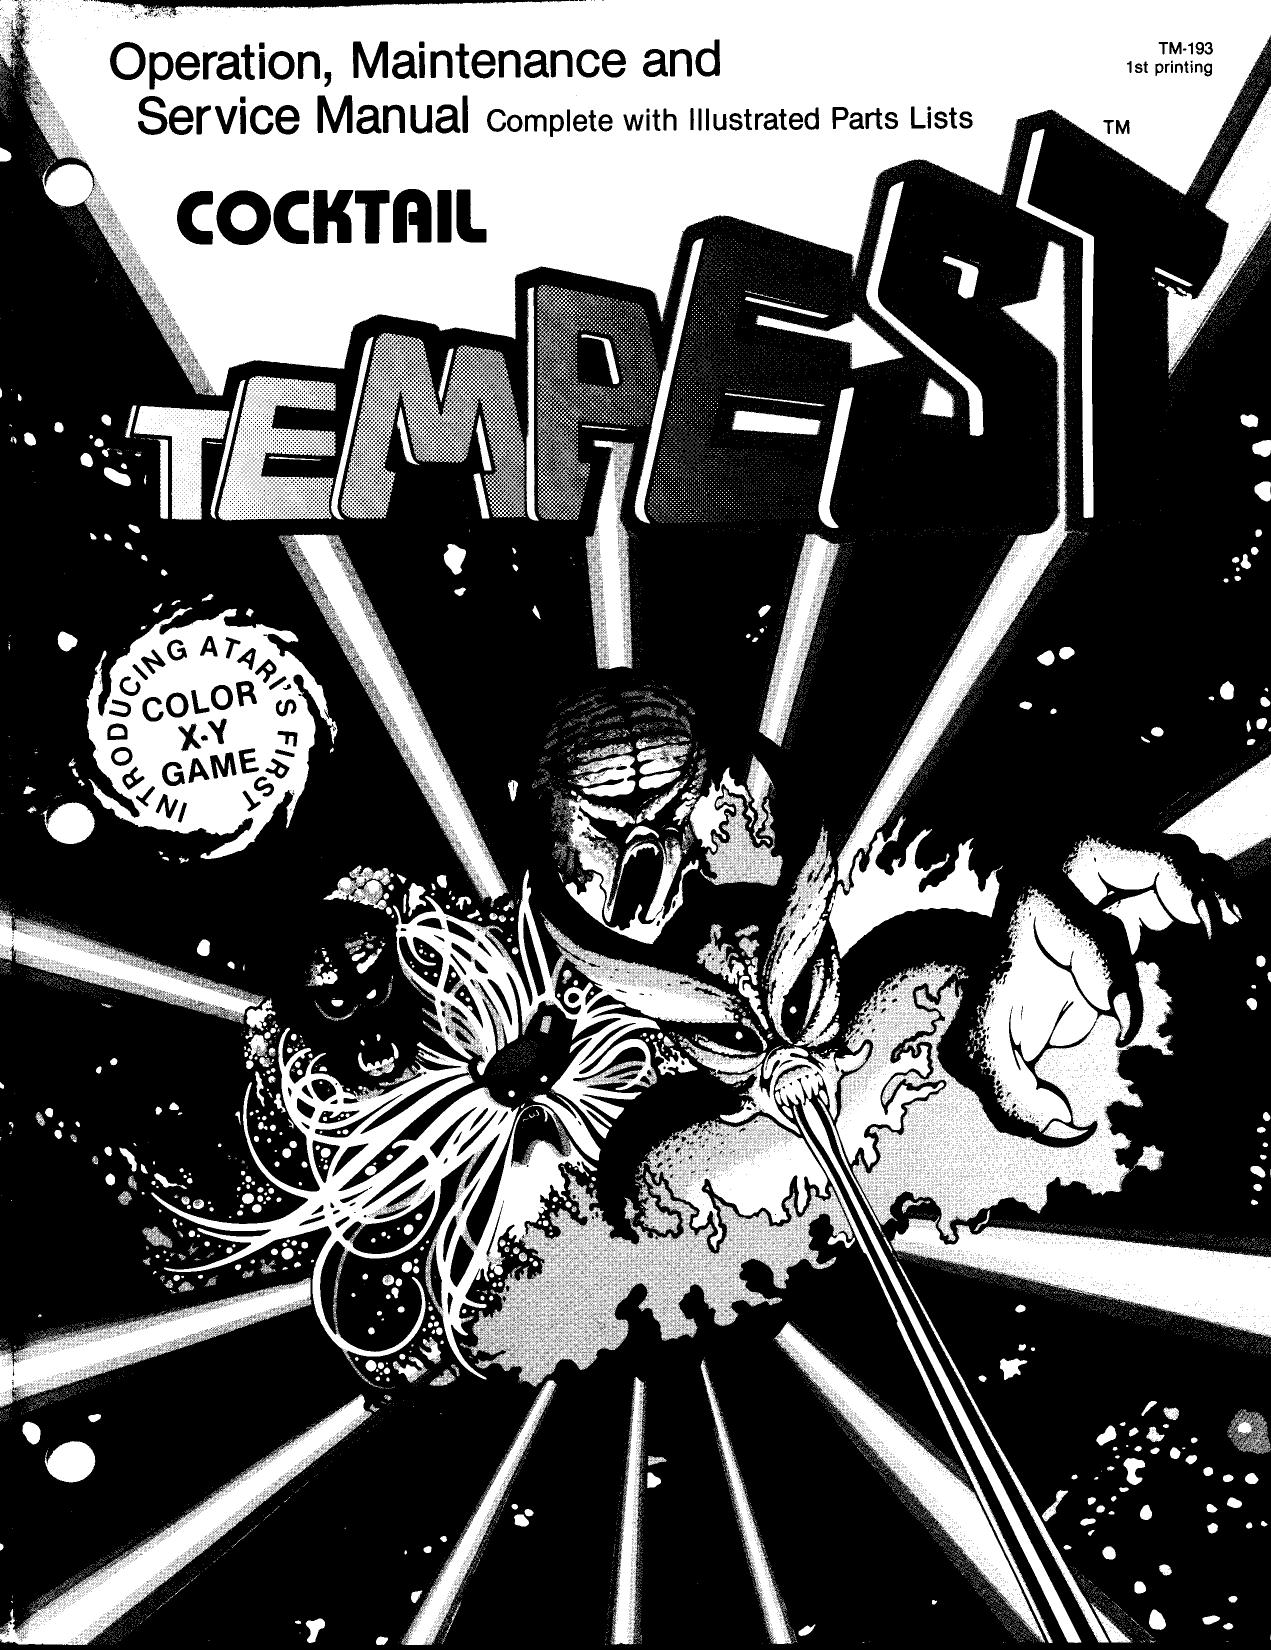 Tempest (Cocktail TM-193 1st Printing) (Op-Maint-Serv-Parts) (U)